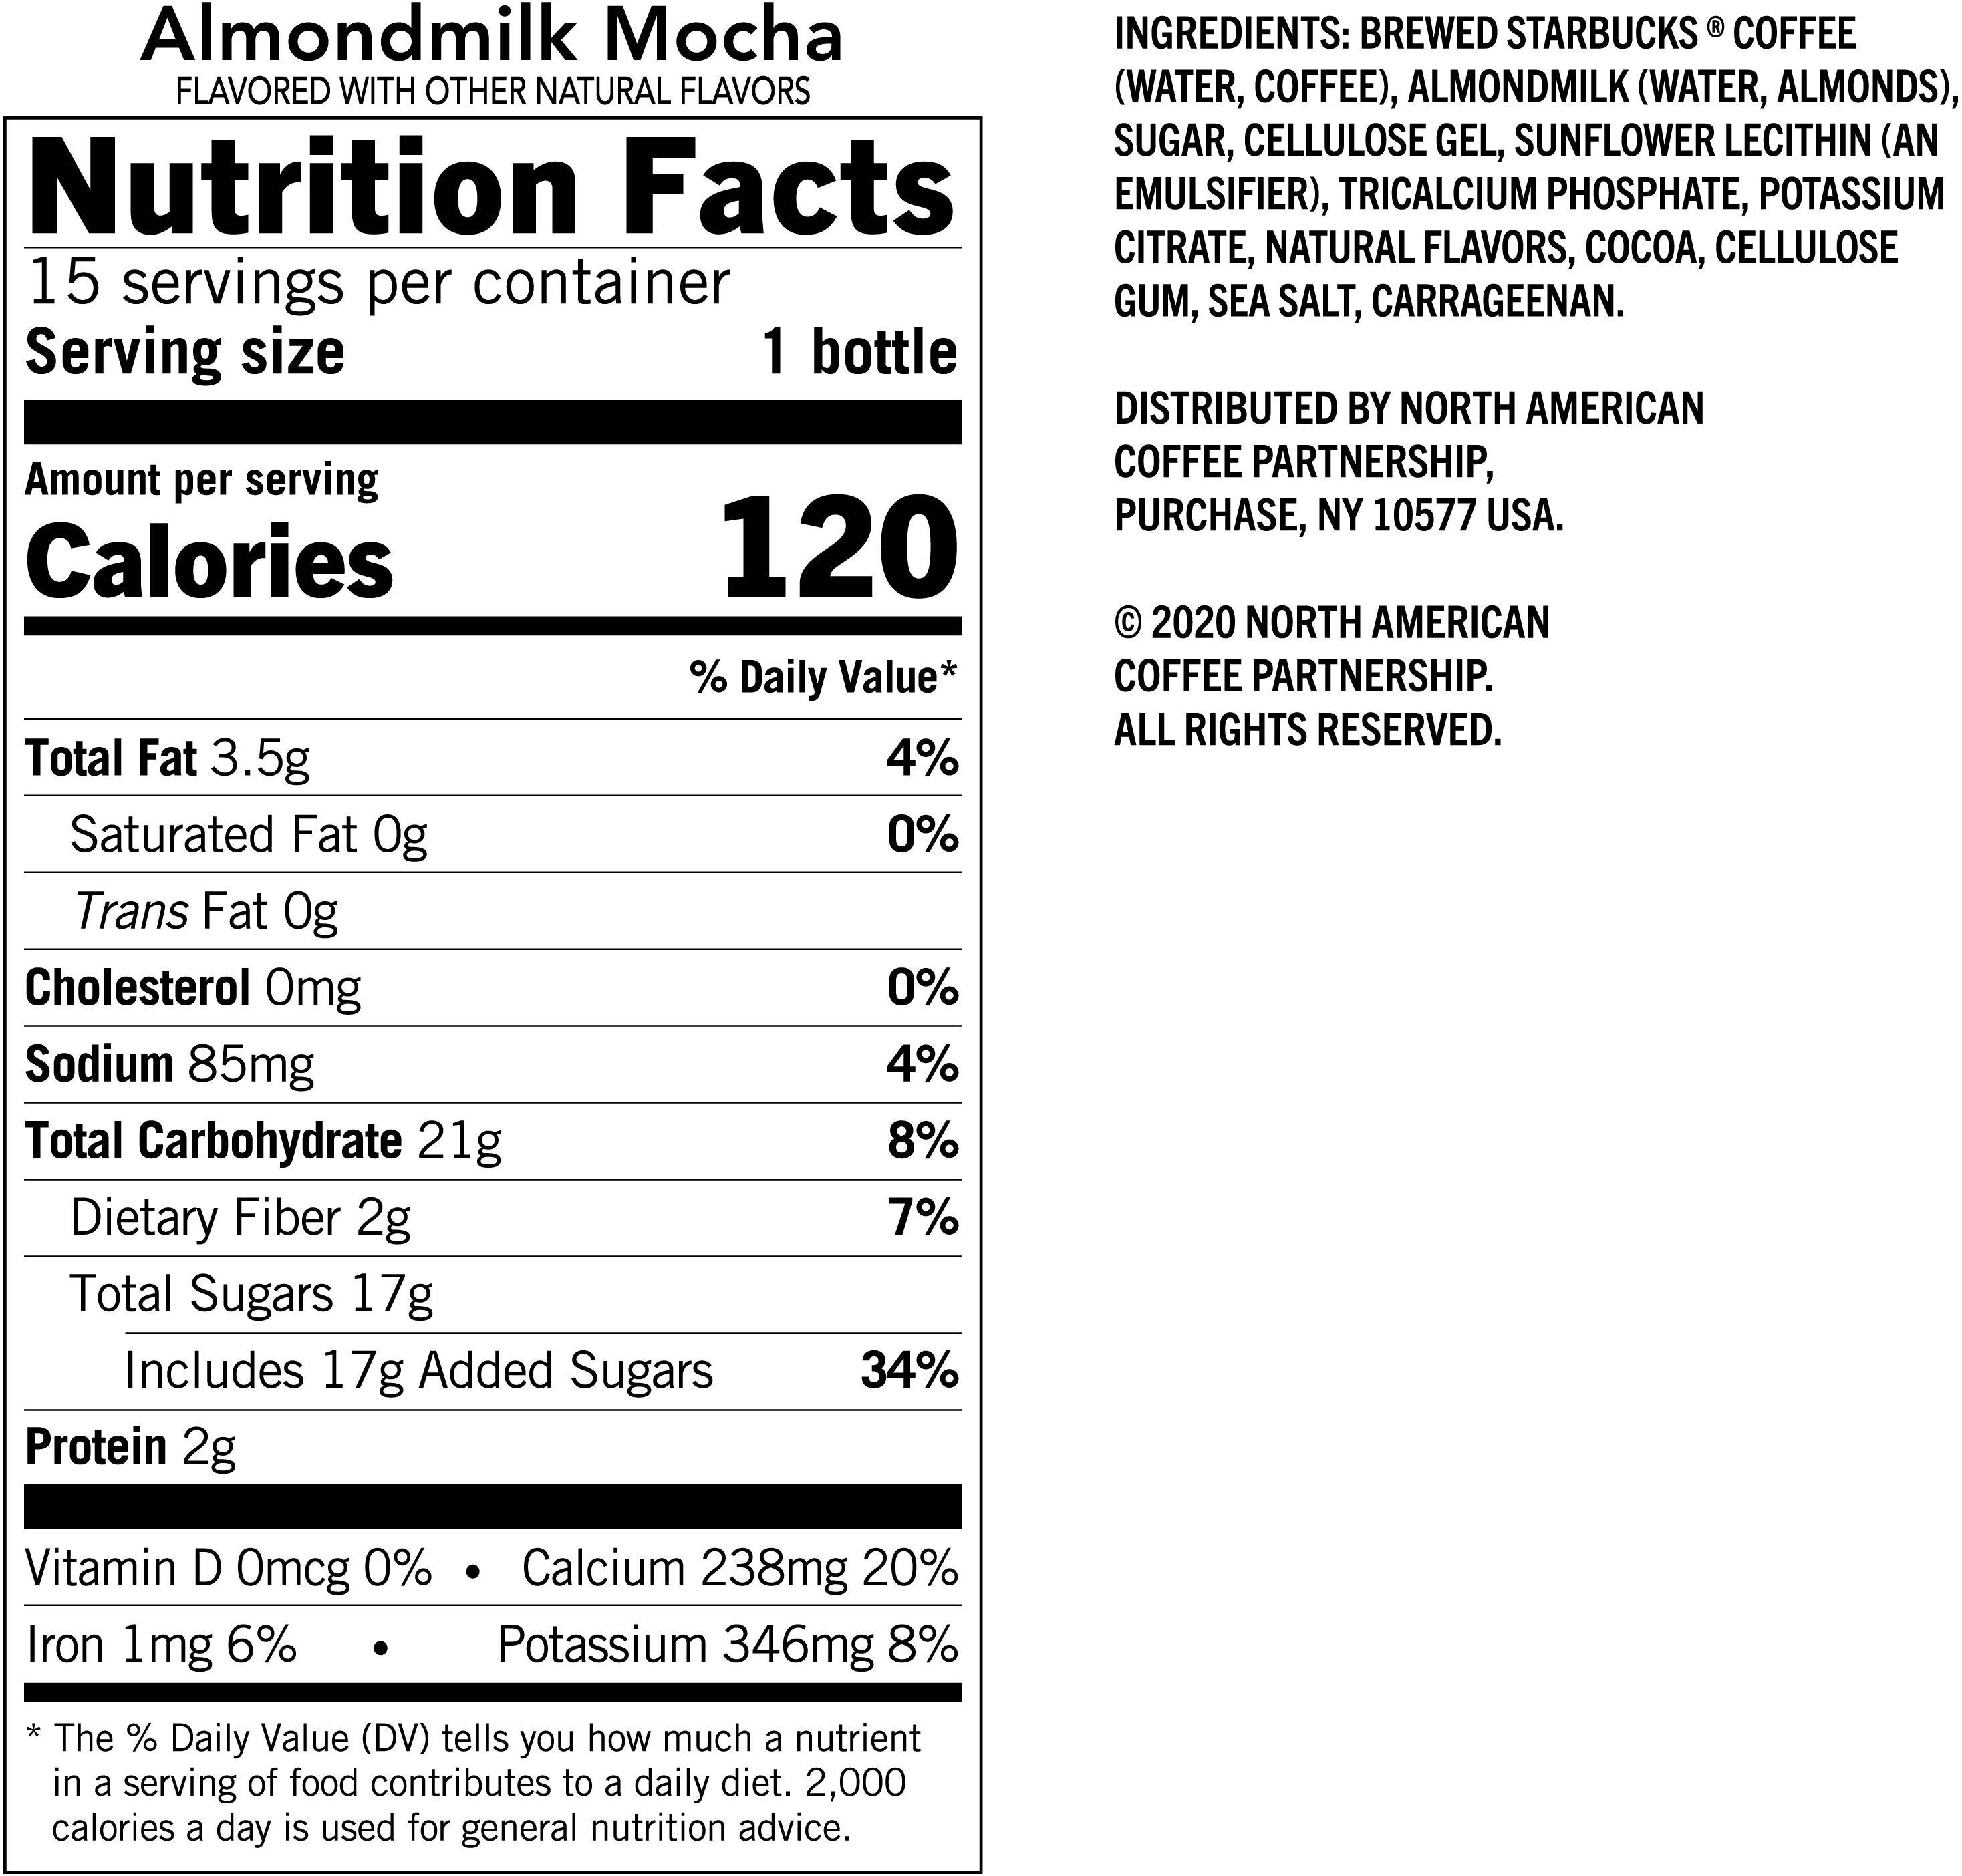 Image describing nutrition information for product Frappuccino Almond Milk Mocha